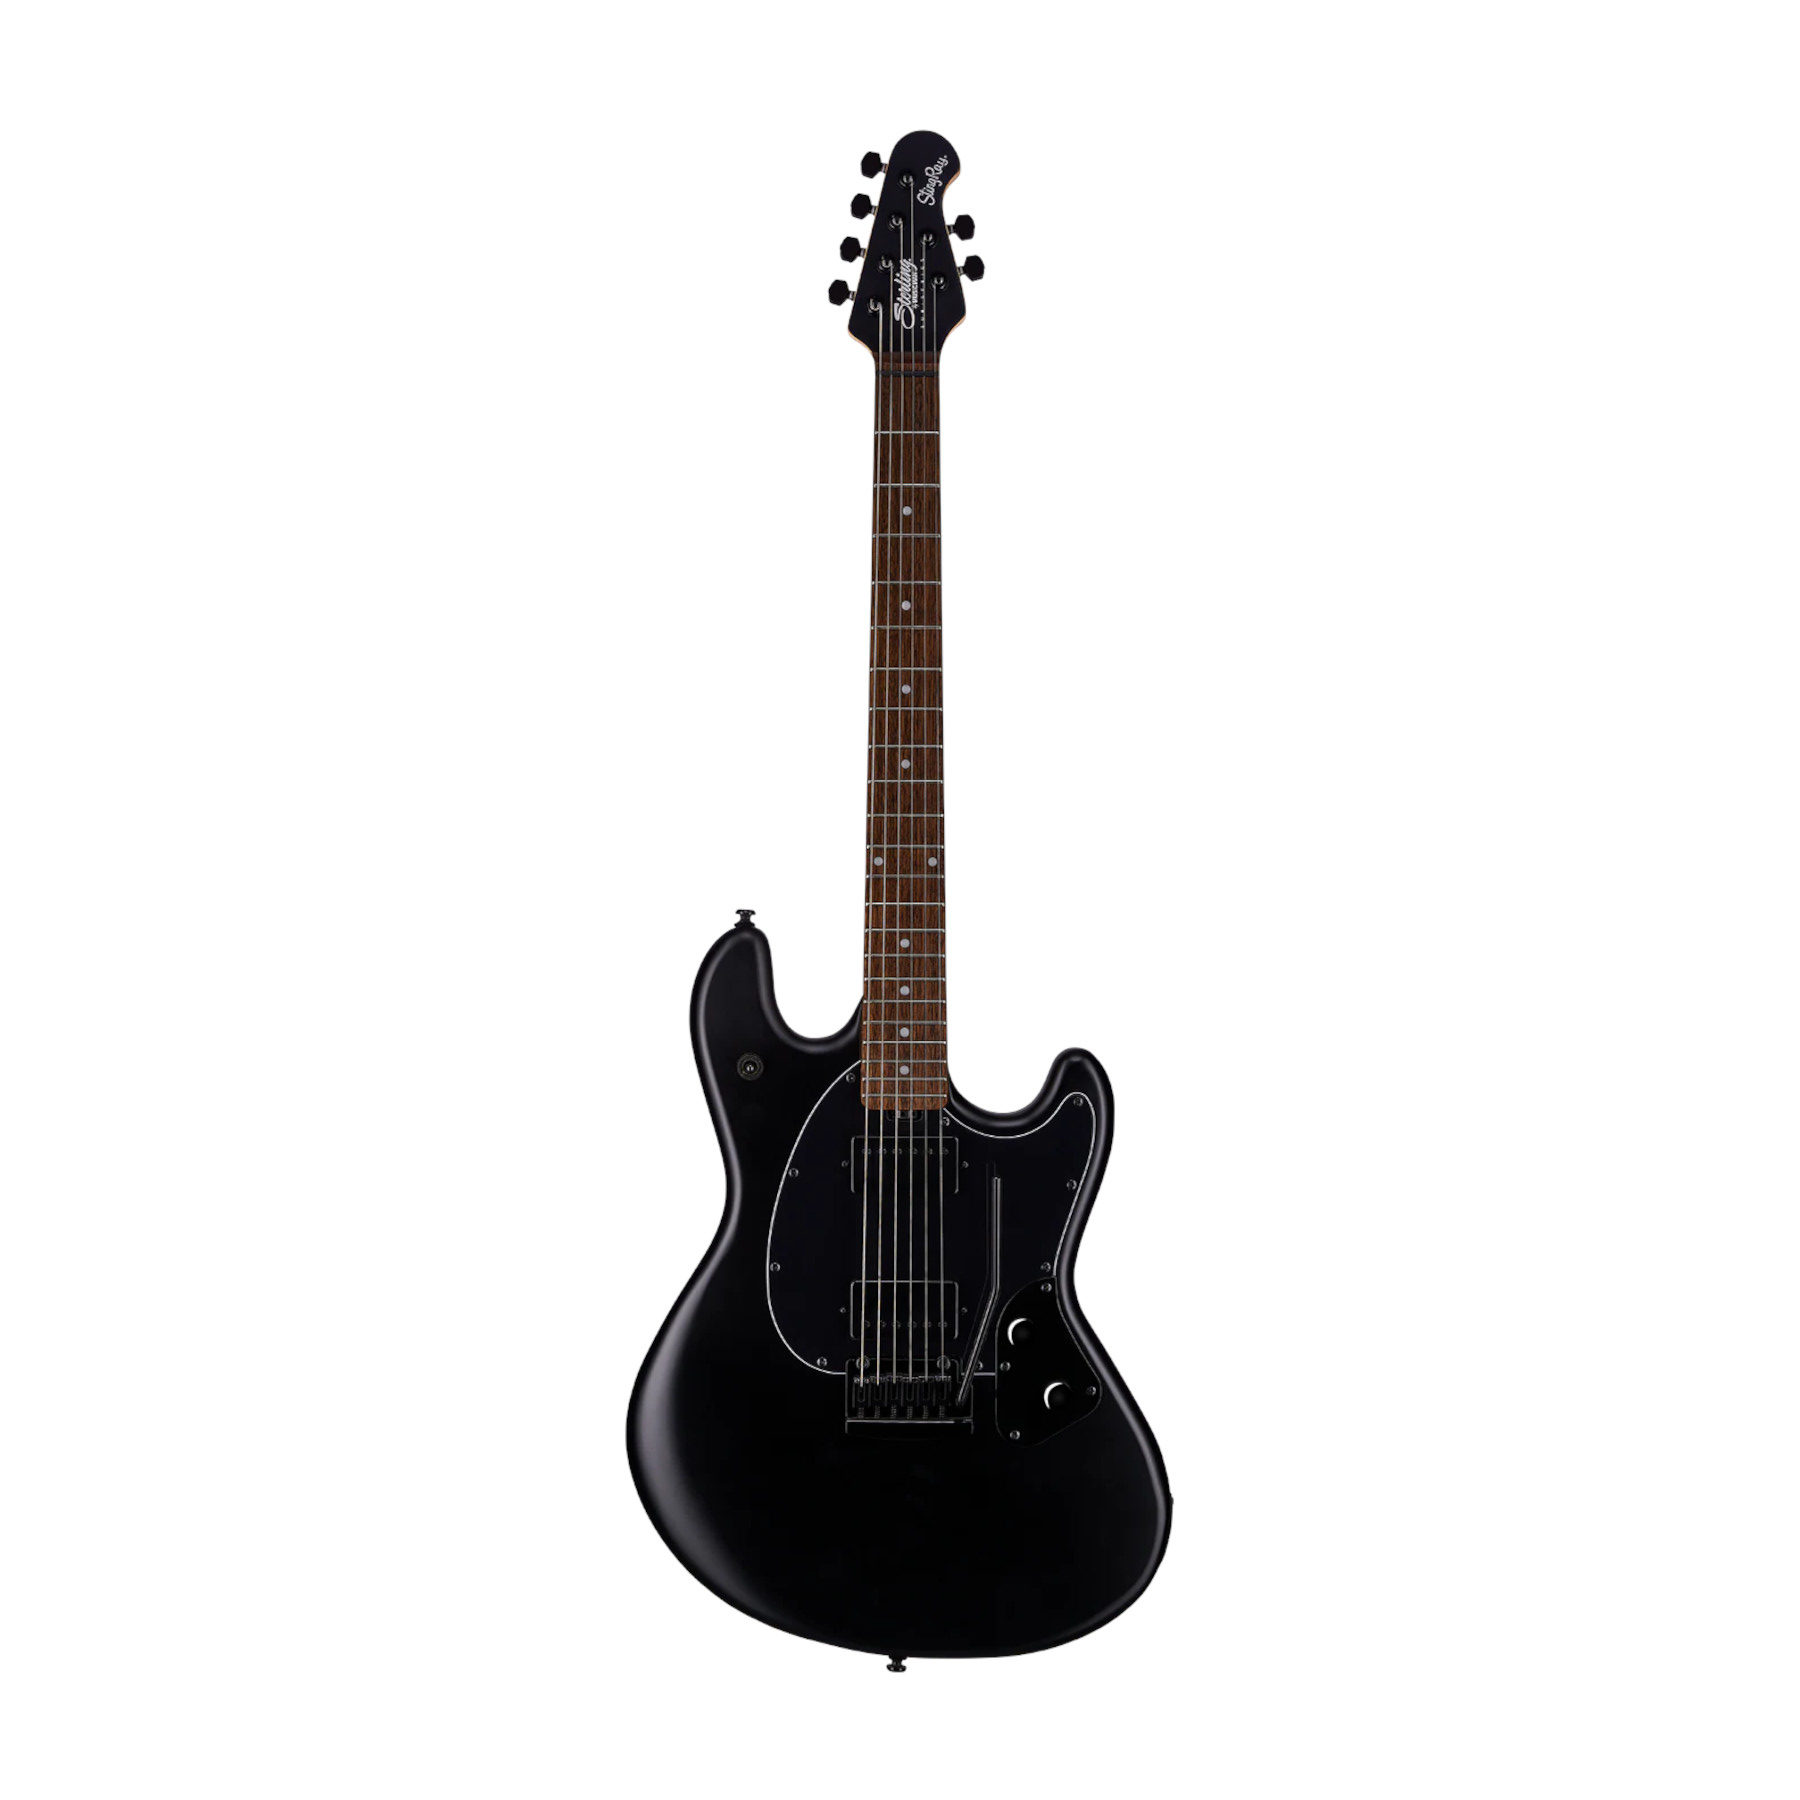 Sterling by Music Man StingRay Guitar SR30 Guitar - Stealth Black